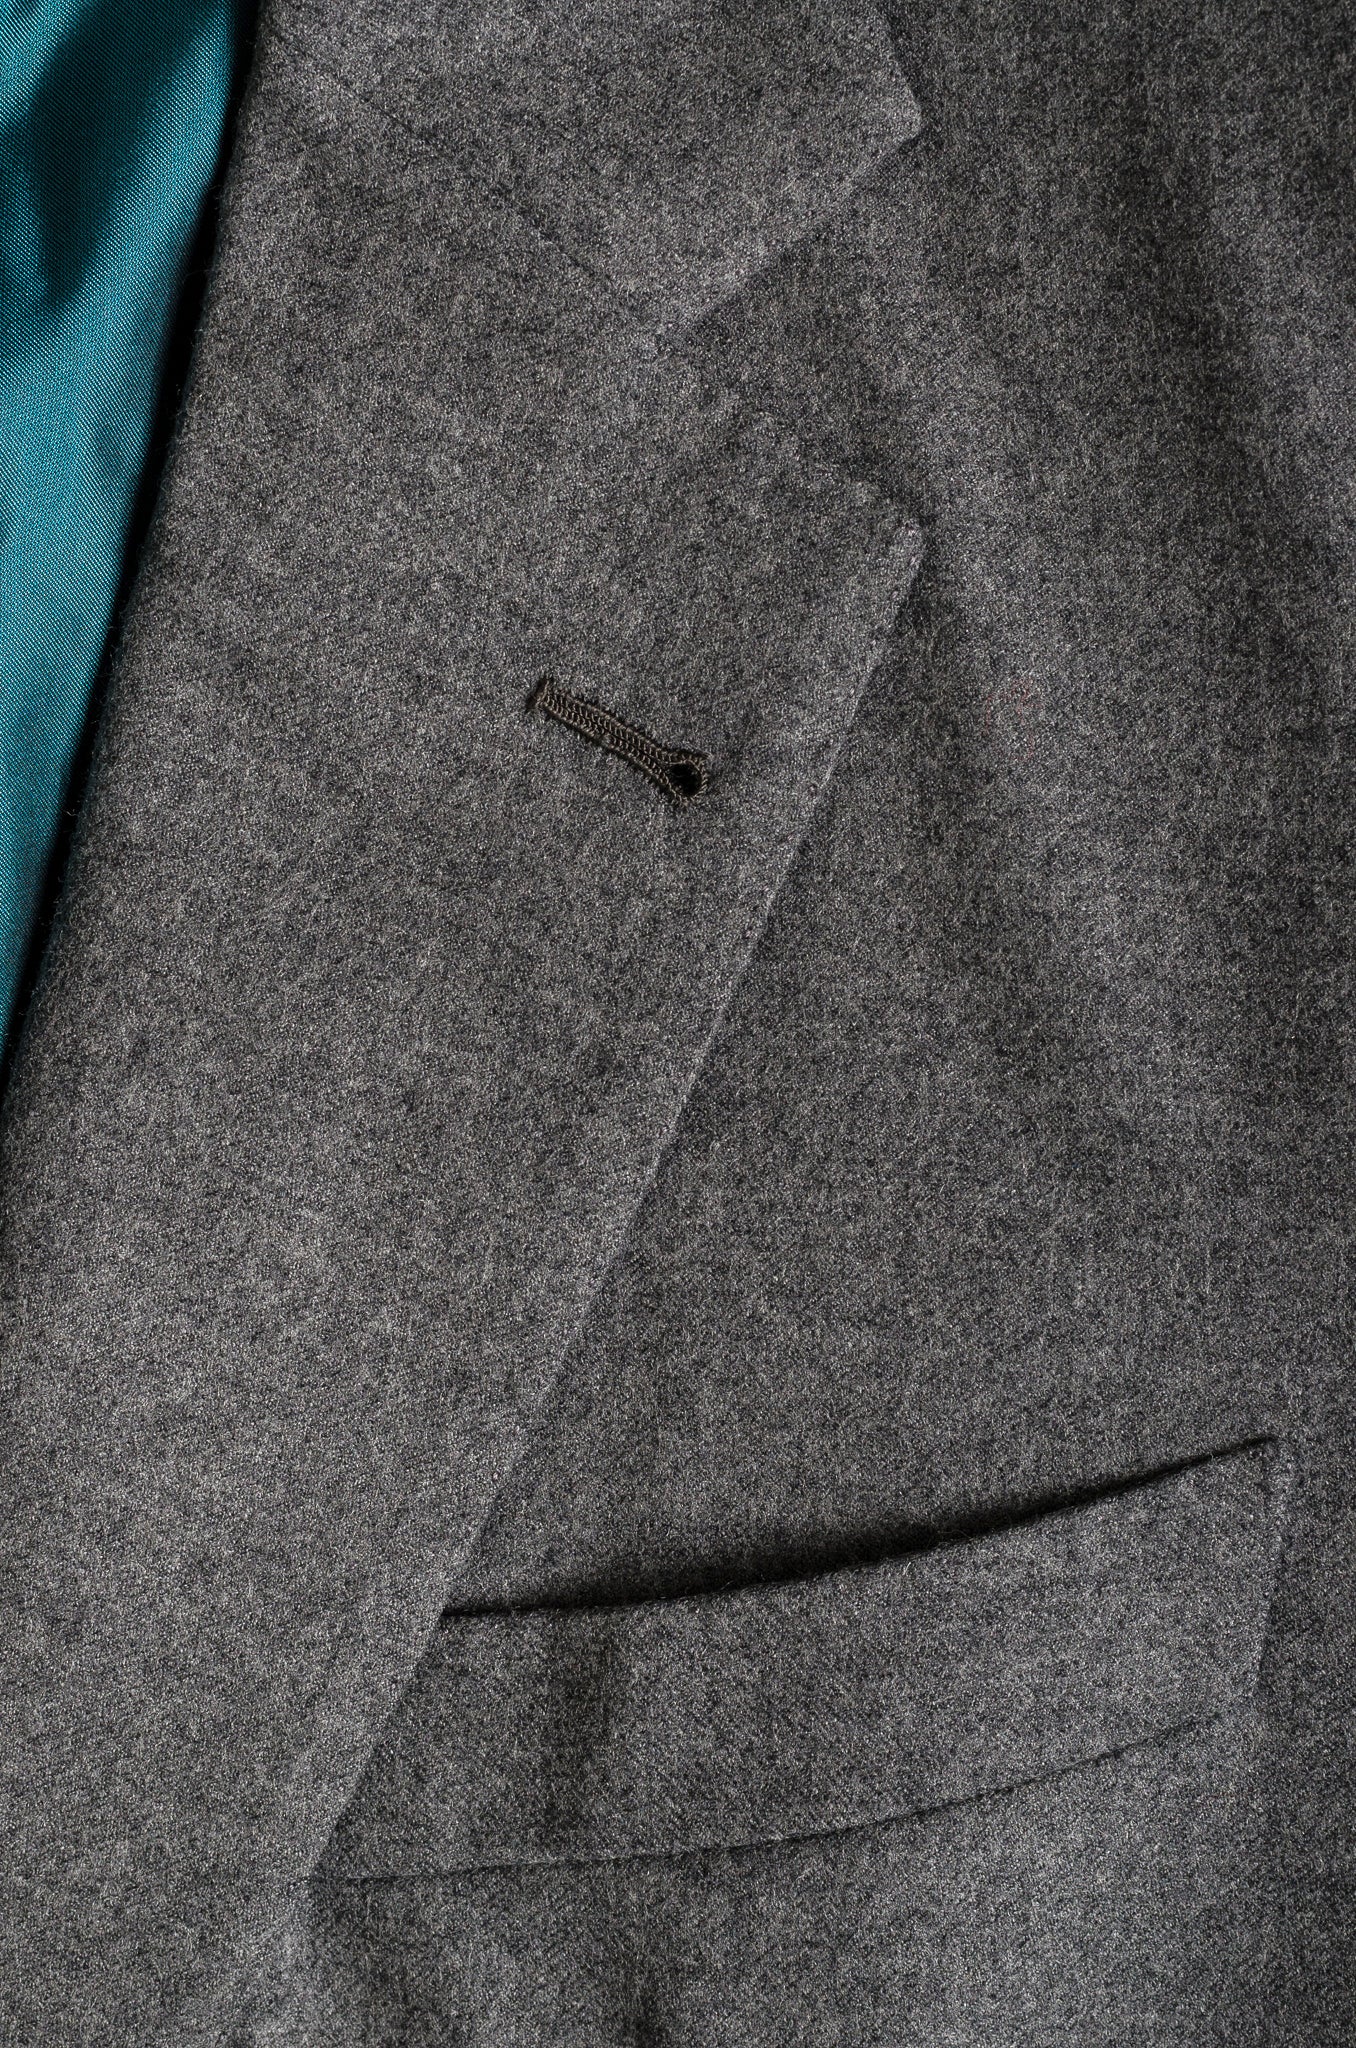 RUBINACCI Handmade Bespoke Gray Wool Flannel Blazer Jacket EU 50 US 38 40